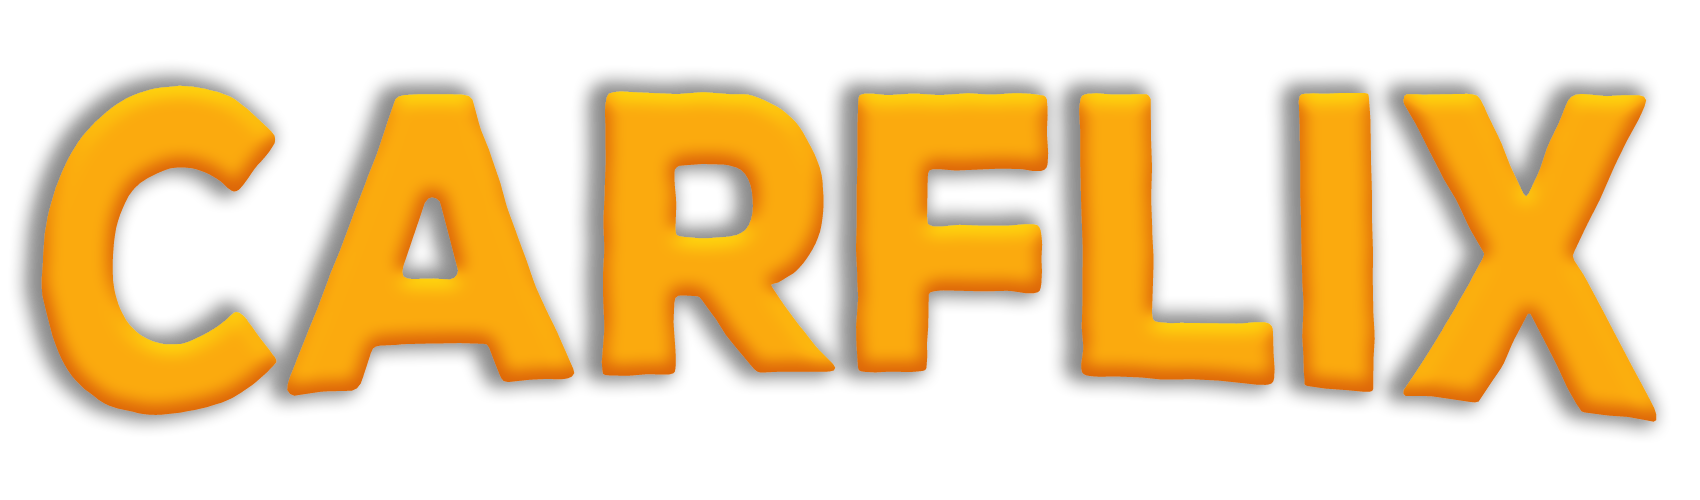 Carflix Hero Retina Logo - PNG Full HD 1080P